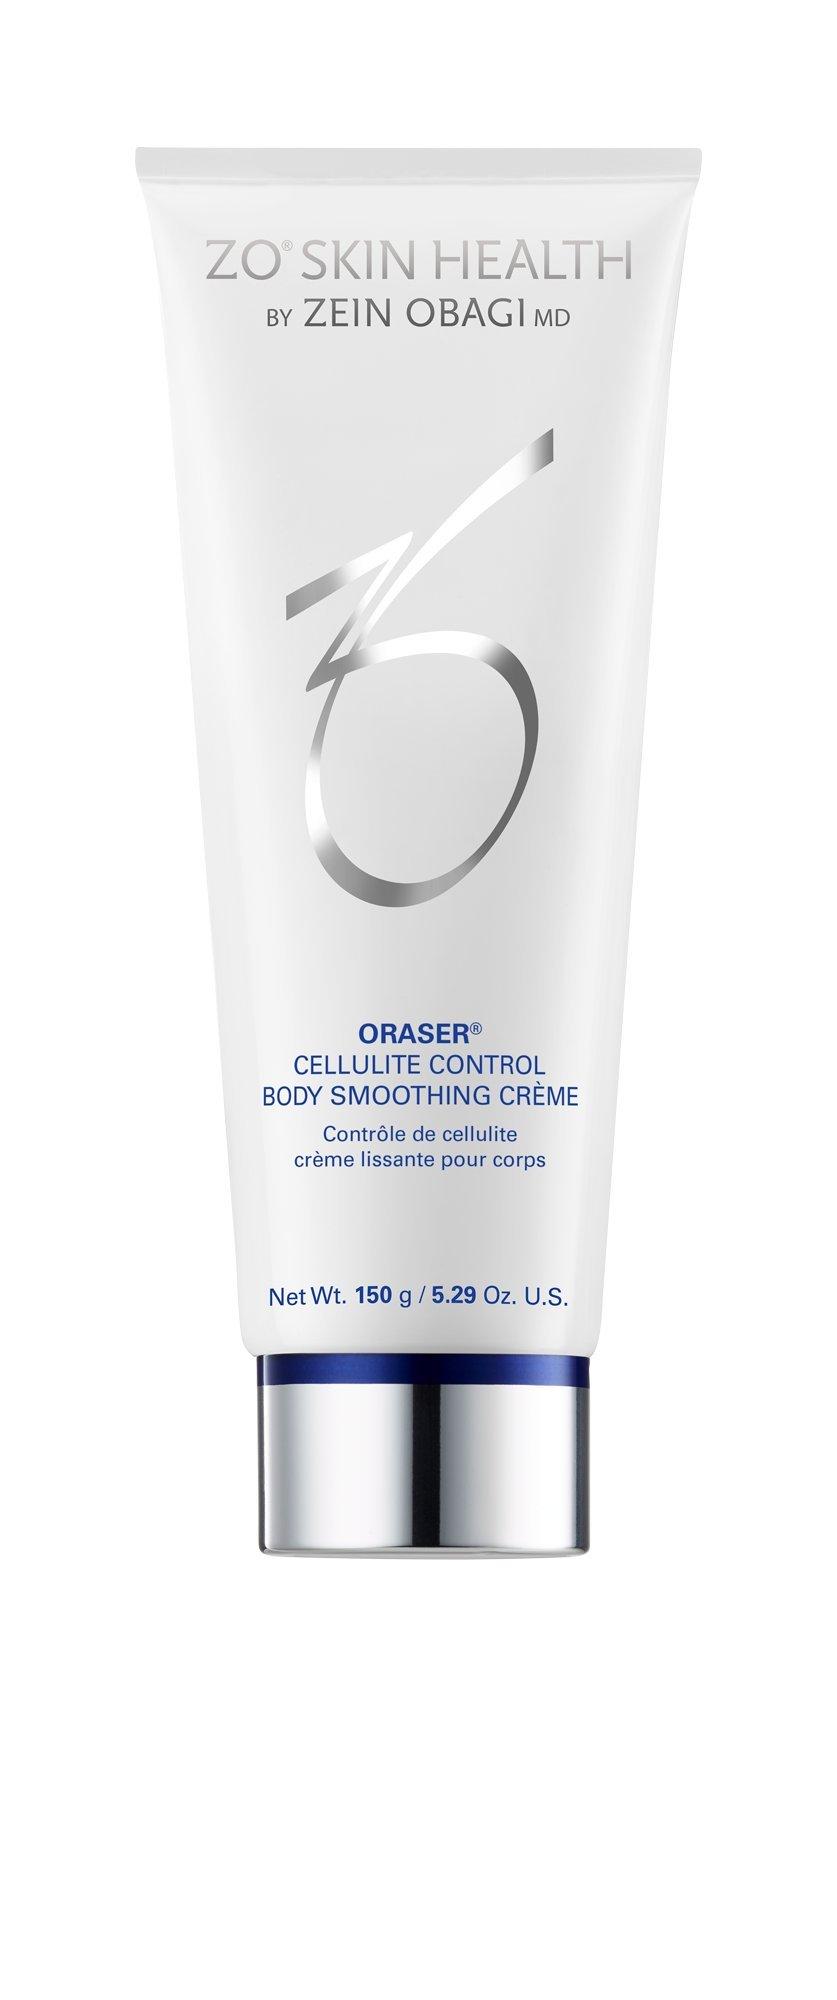 ZO Skin Health ORASER Cellulite Control Body Smoothing Cream 5.29